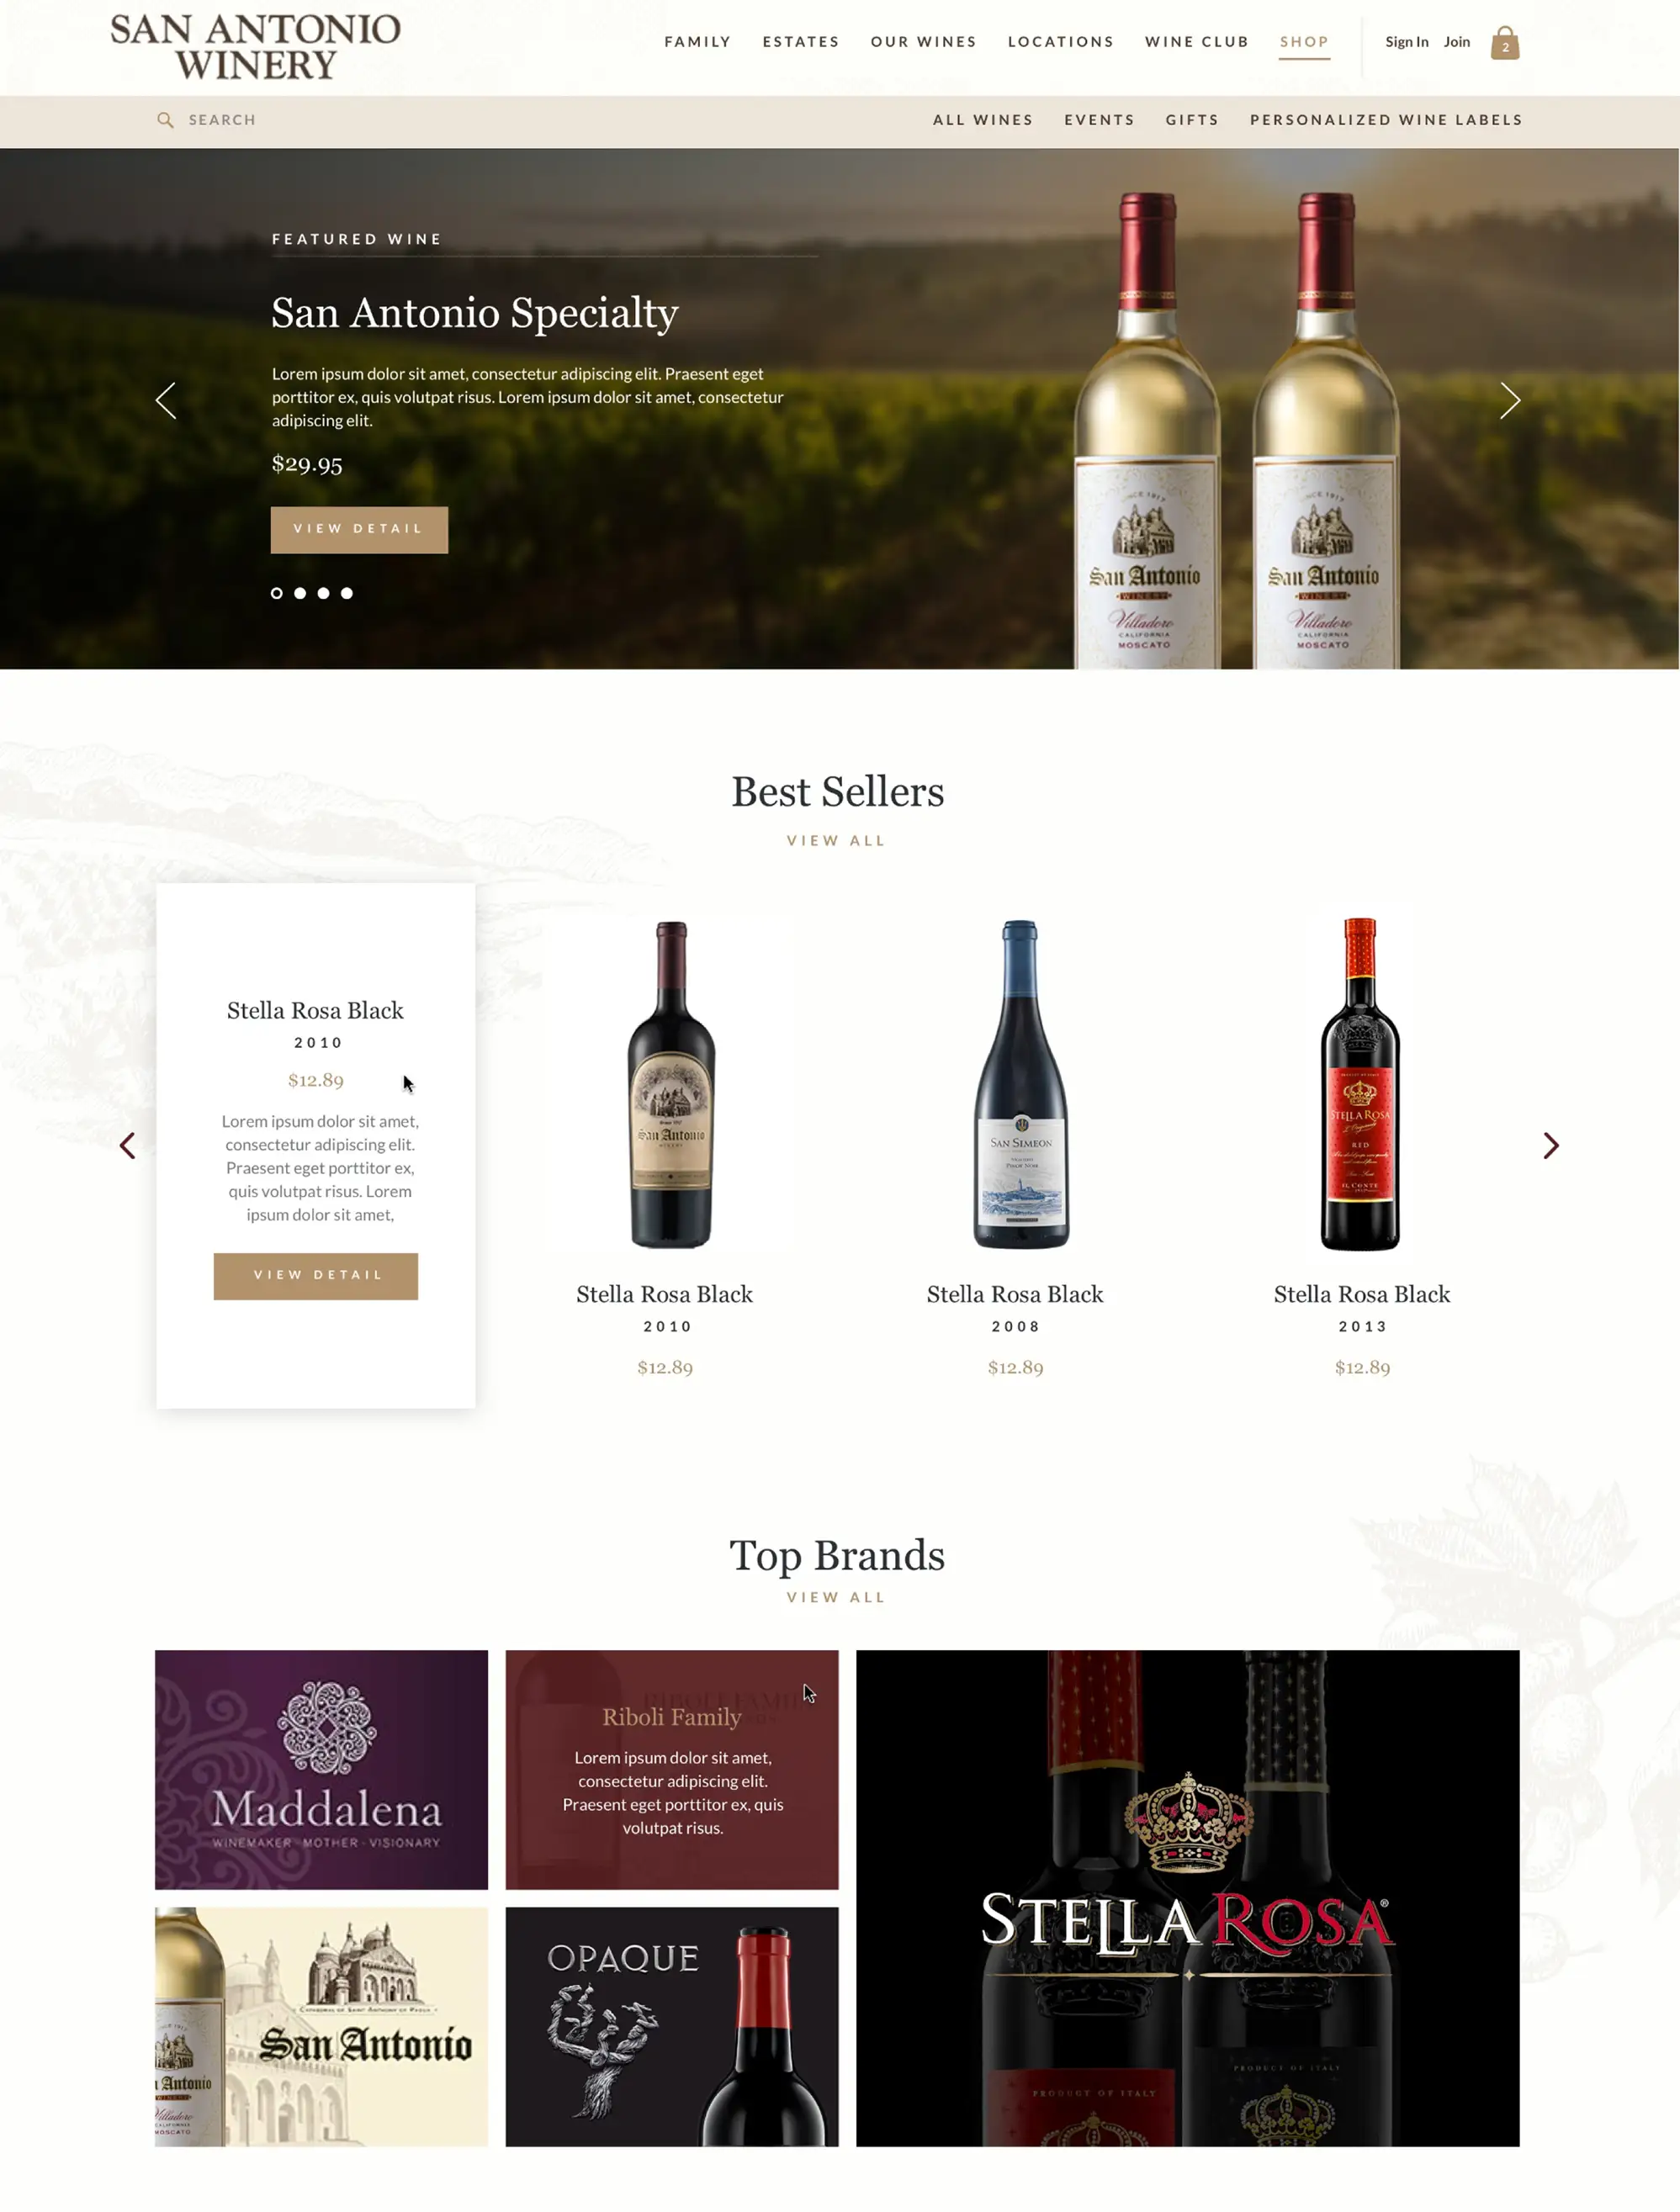 San Antonio Winery Website Design Case Study